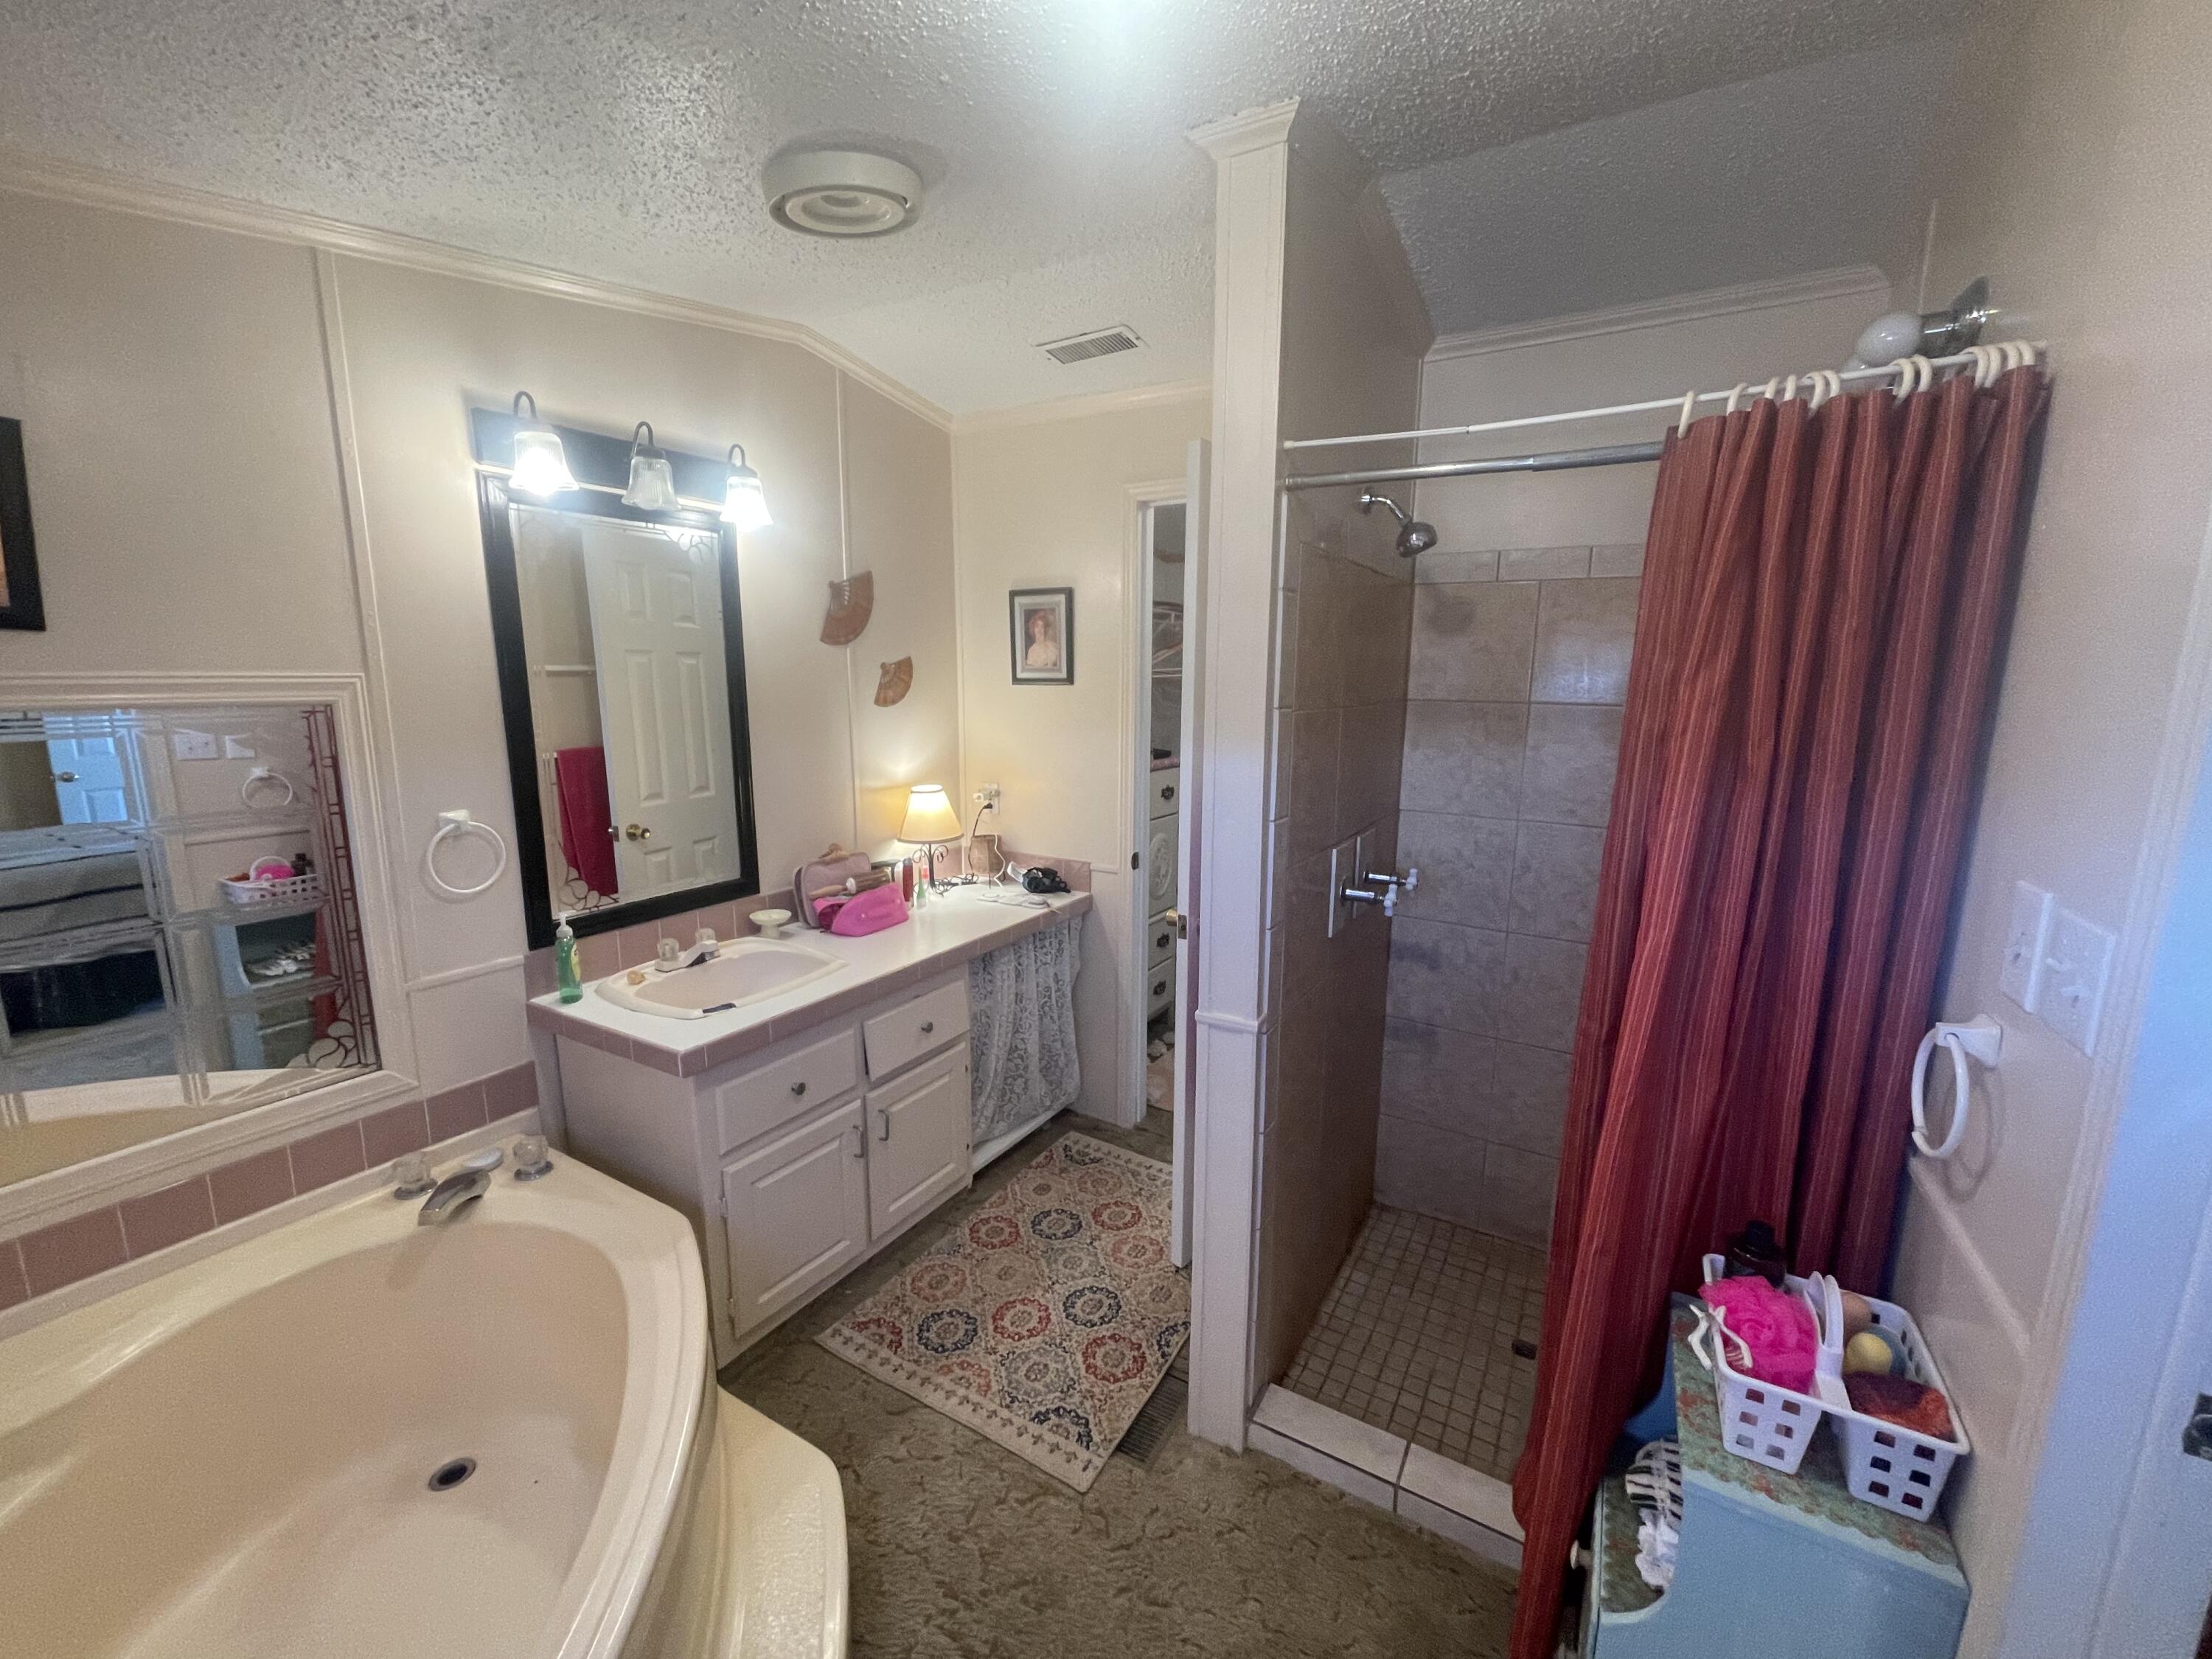 38 Cougar Run, Datil, New Mexico 87821, 3 Bedrooms Bedrooms, ,2 BathroomsBathrooms,Residential,For Sale,38 Cougar Run,1059682